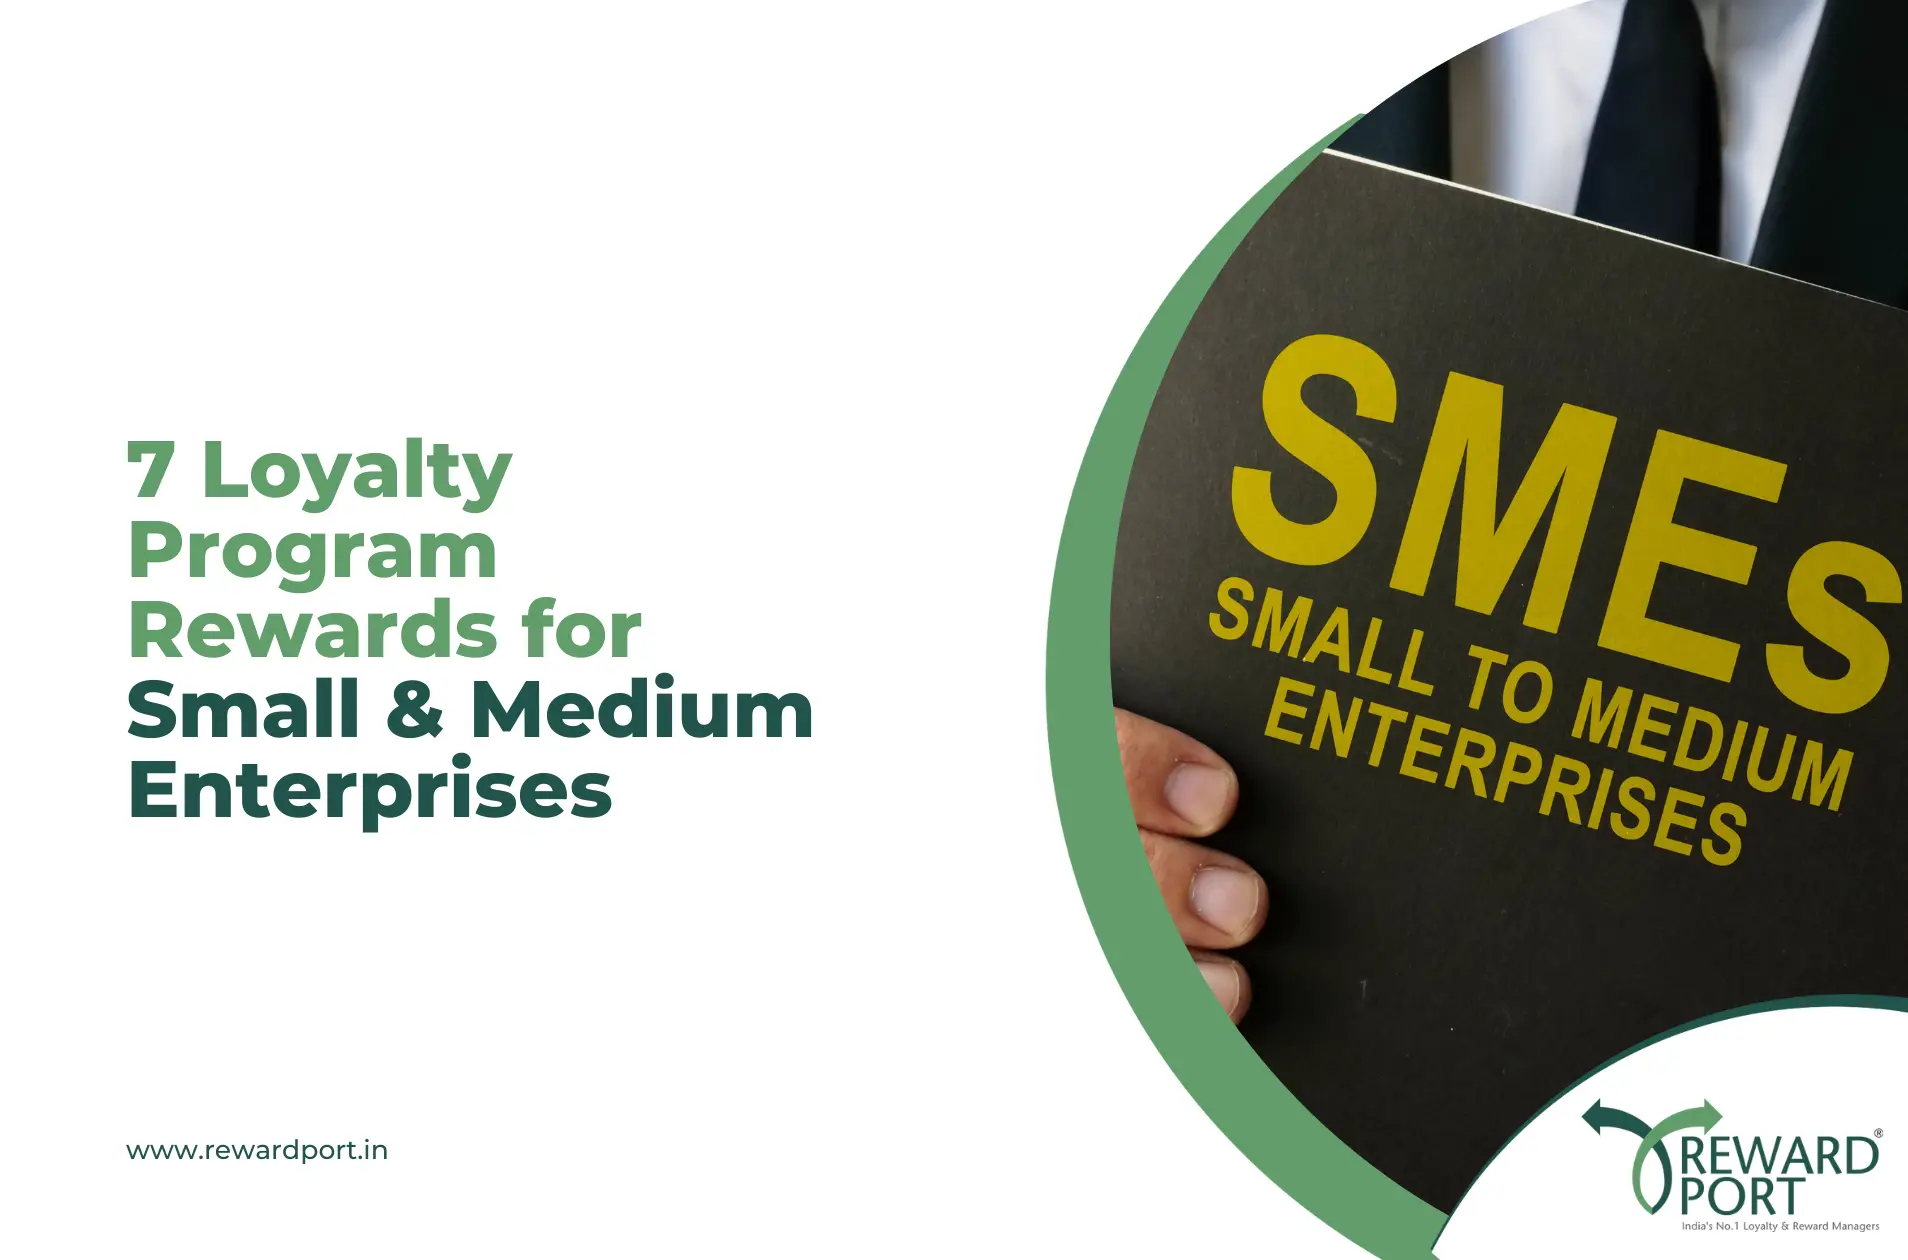 7 Loyalty Program Rewards for Small Medium Enterprises